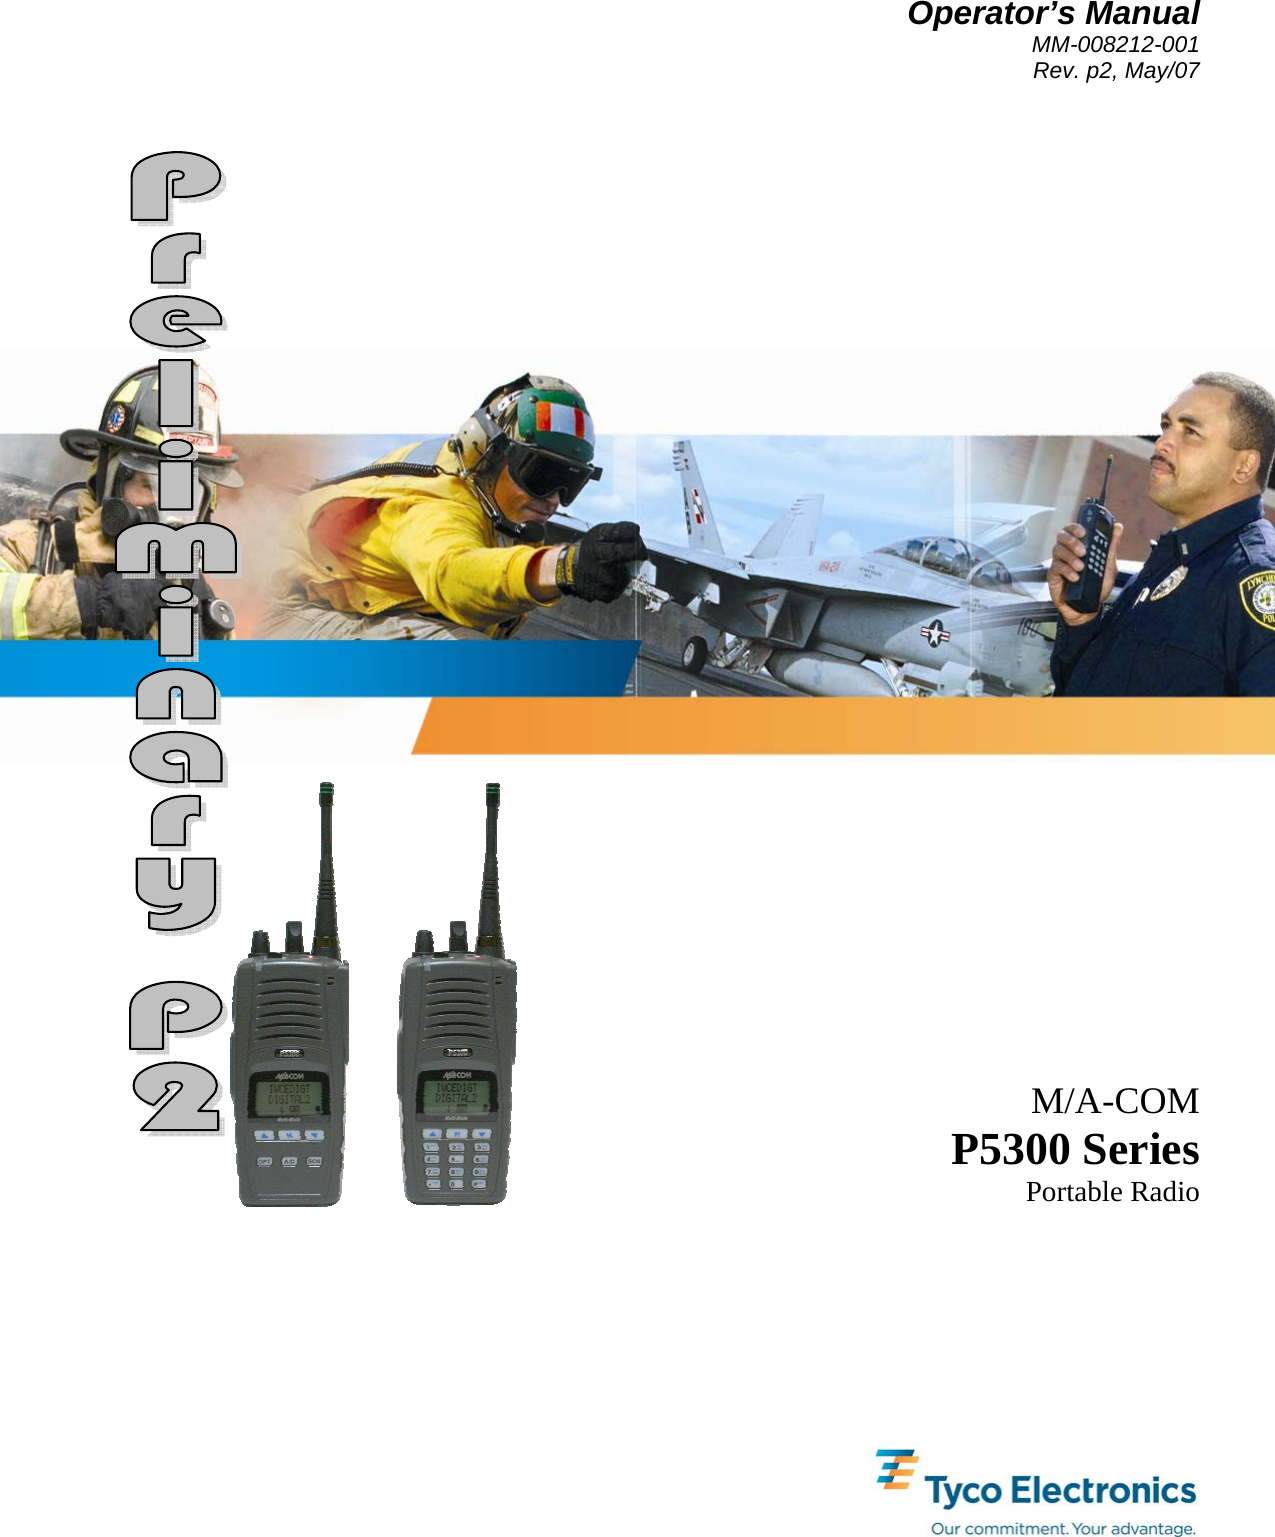 Operator’s Manual MM-008212-001 Rev. p2, May/07        M/A-COM P5300 Series Portable Radio 